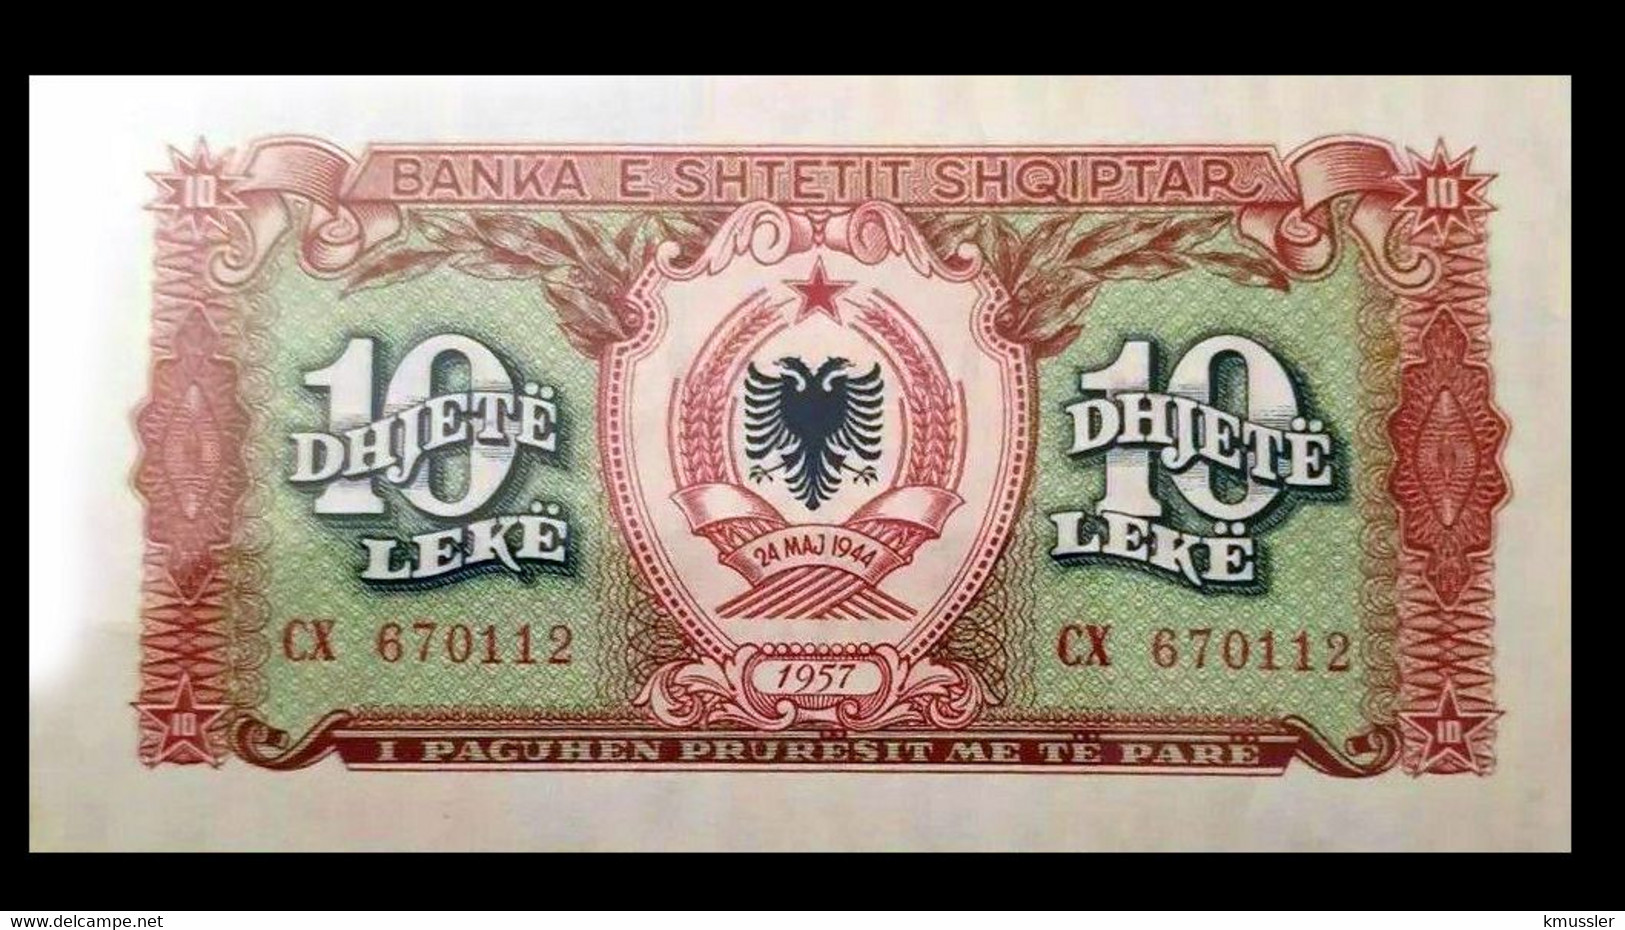 # # # Sehr Seltene Banknote Aus Albanien (Albania) 100 Franca 1945 UNC # # # - Albania